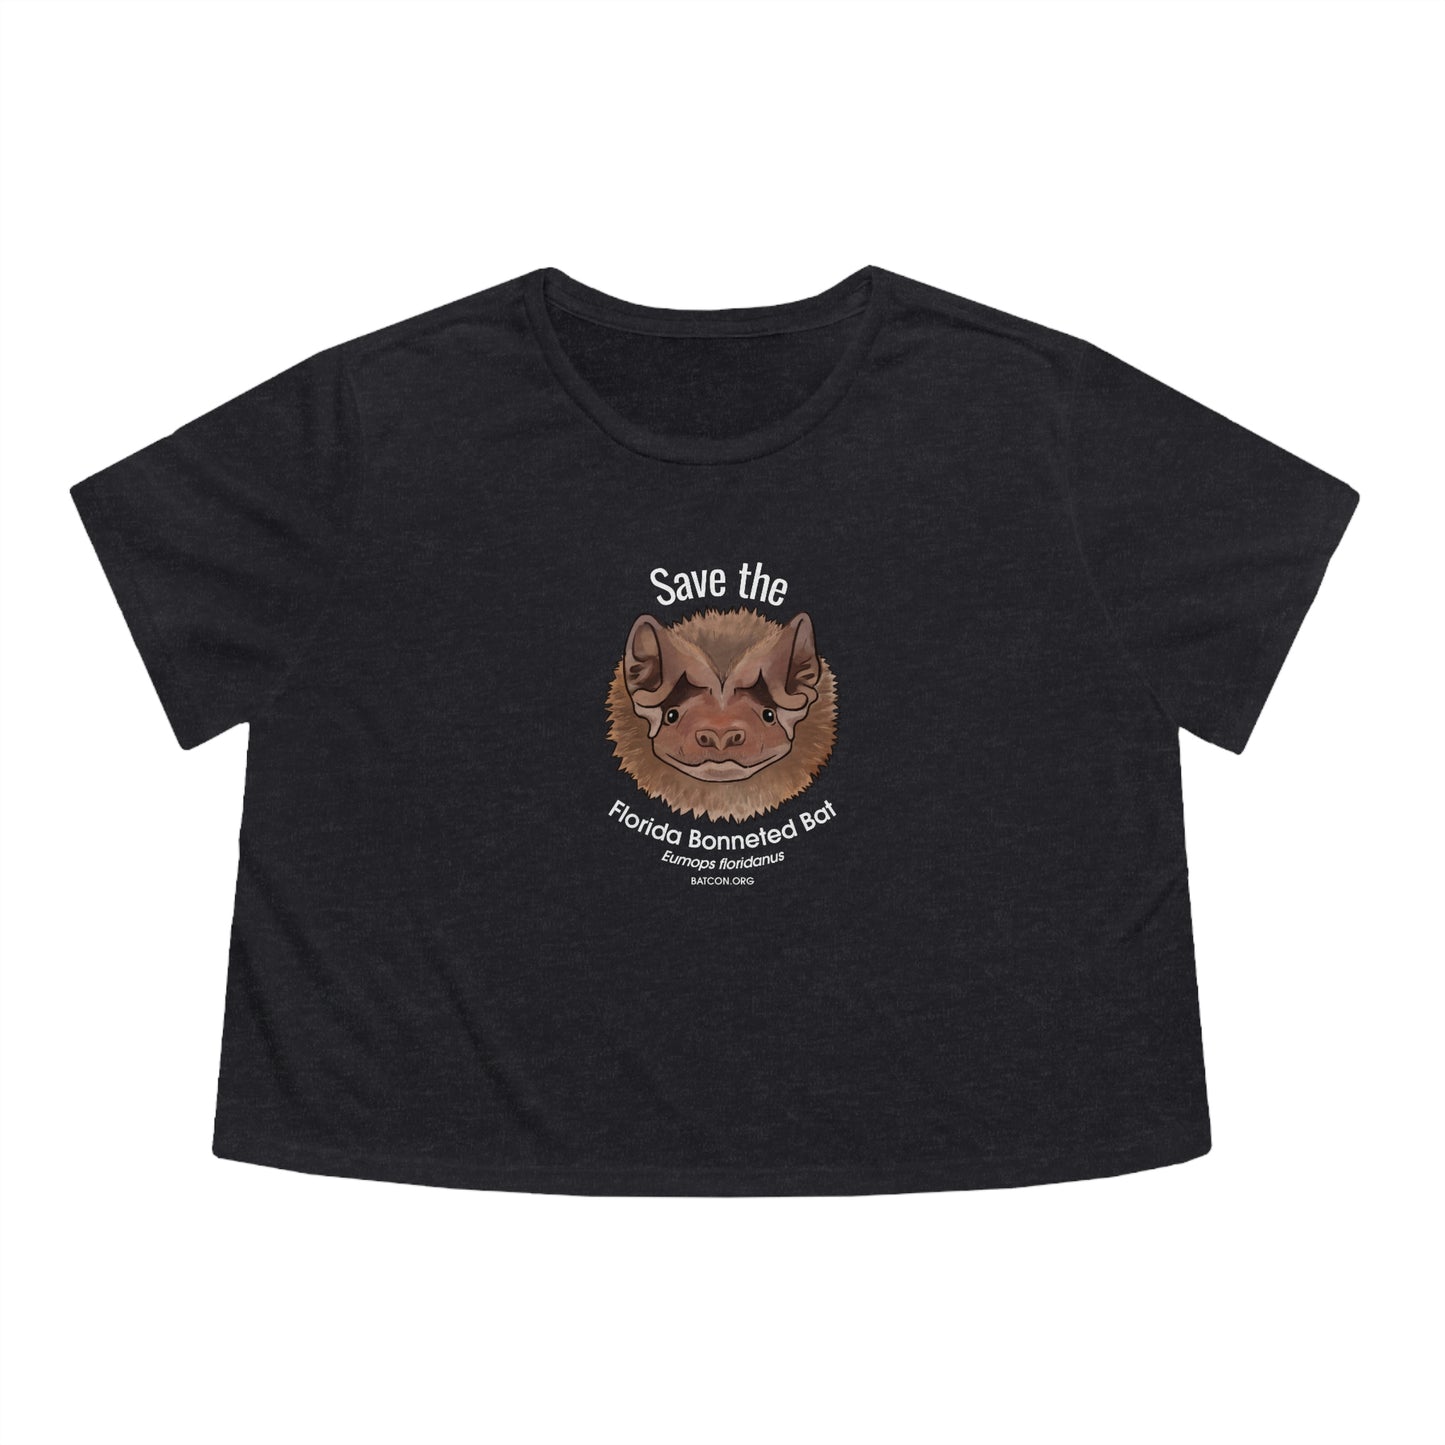 Save the Florida Bonneted Bat - Camiseta recortada para mujer